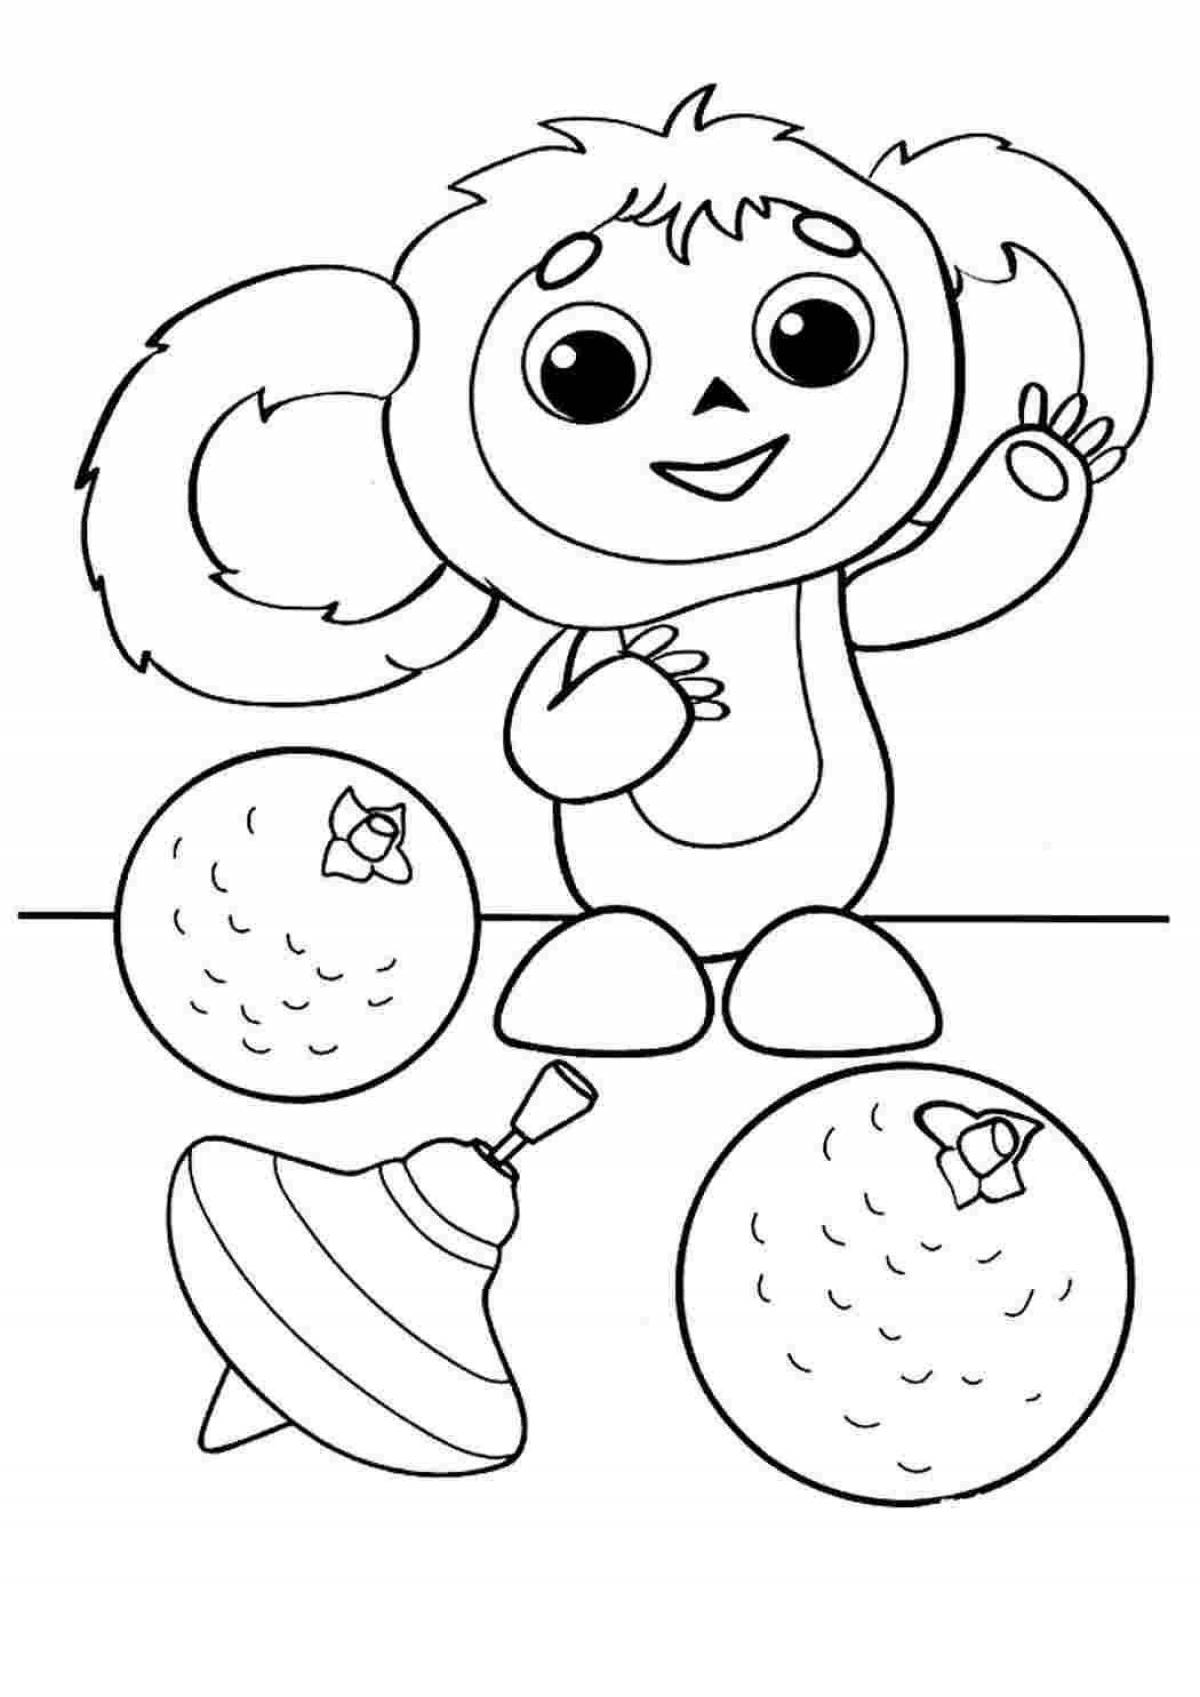 Chic cheburashka with balls